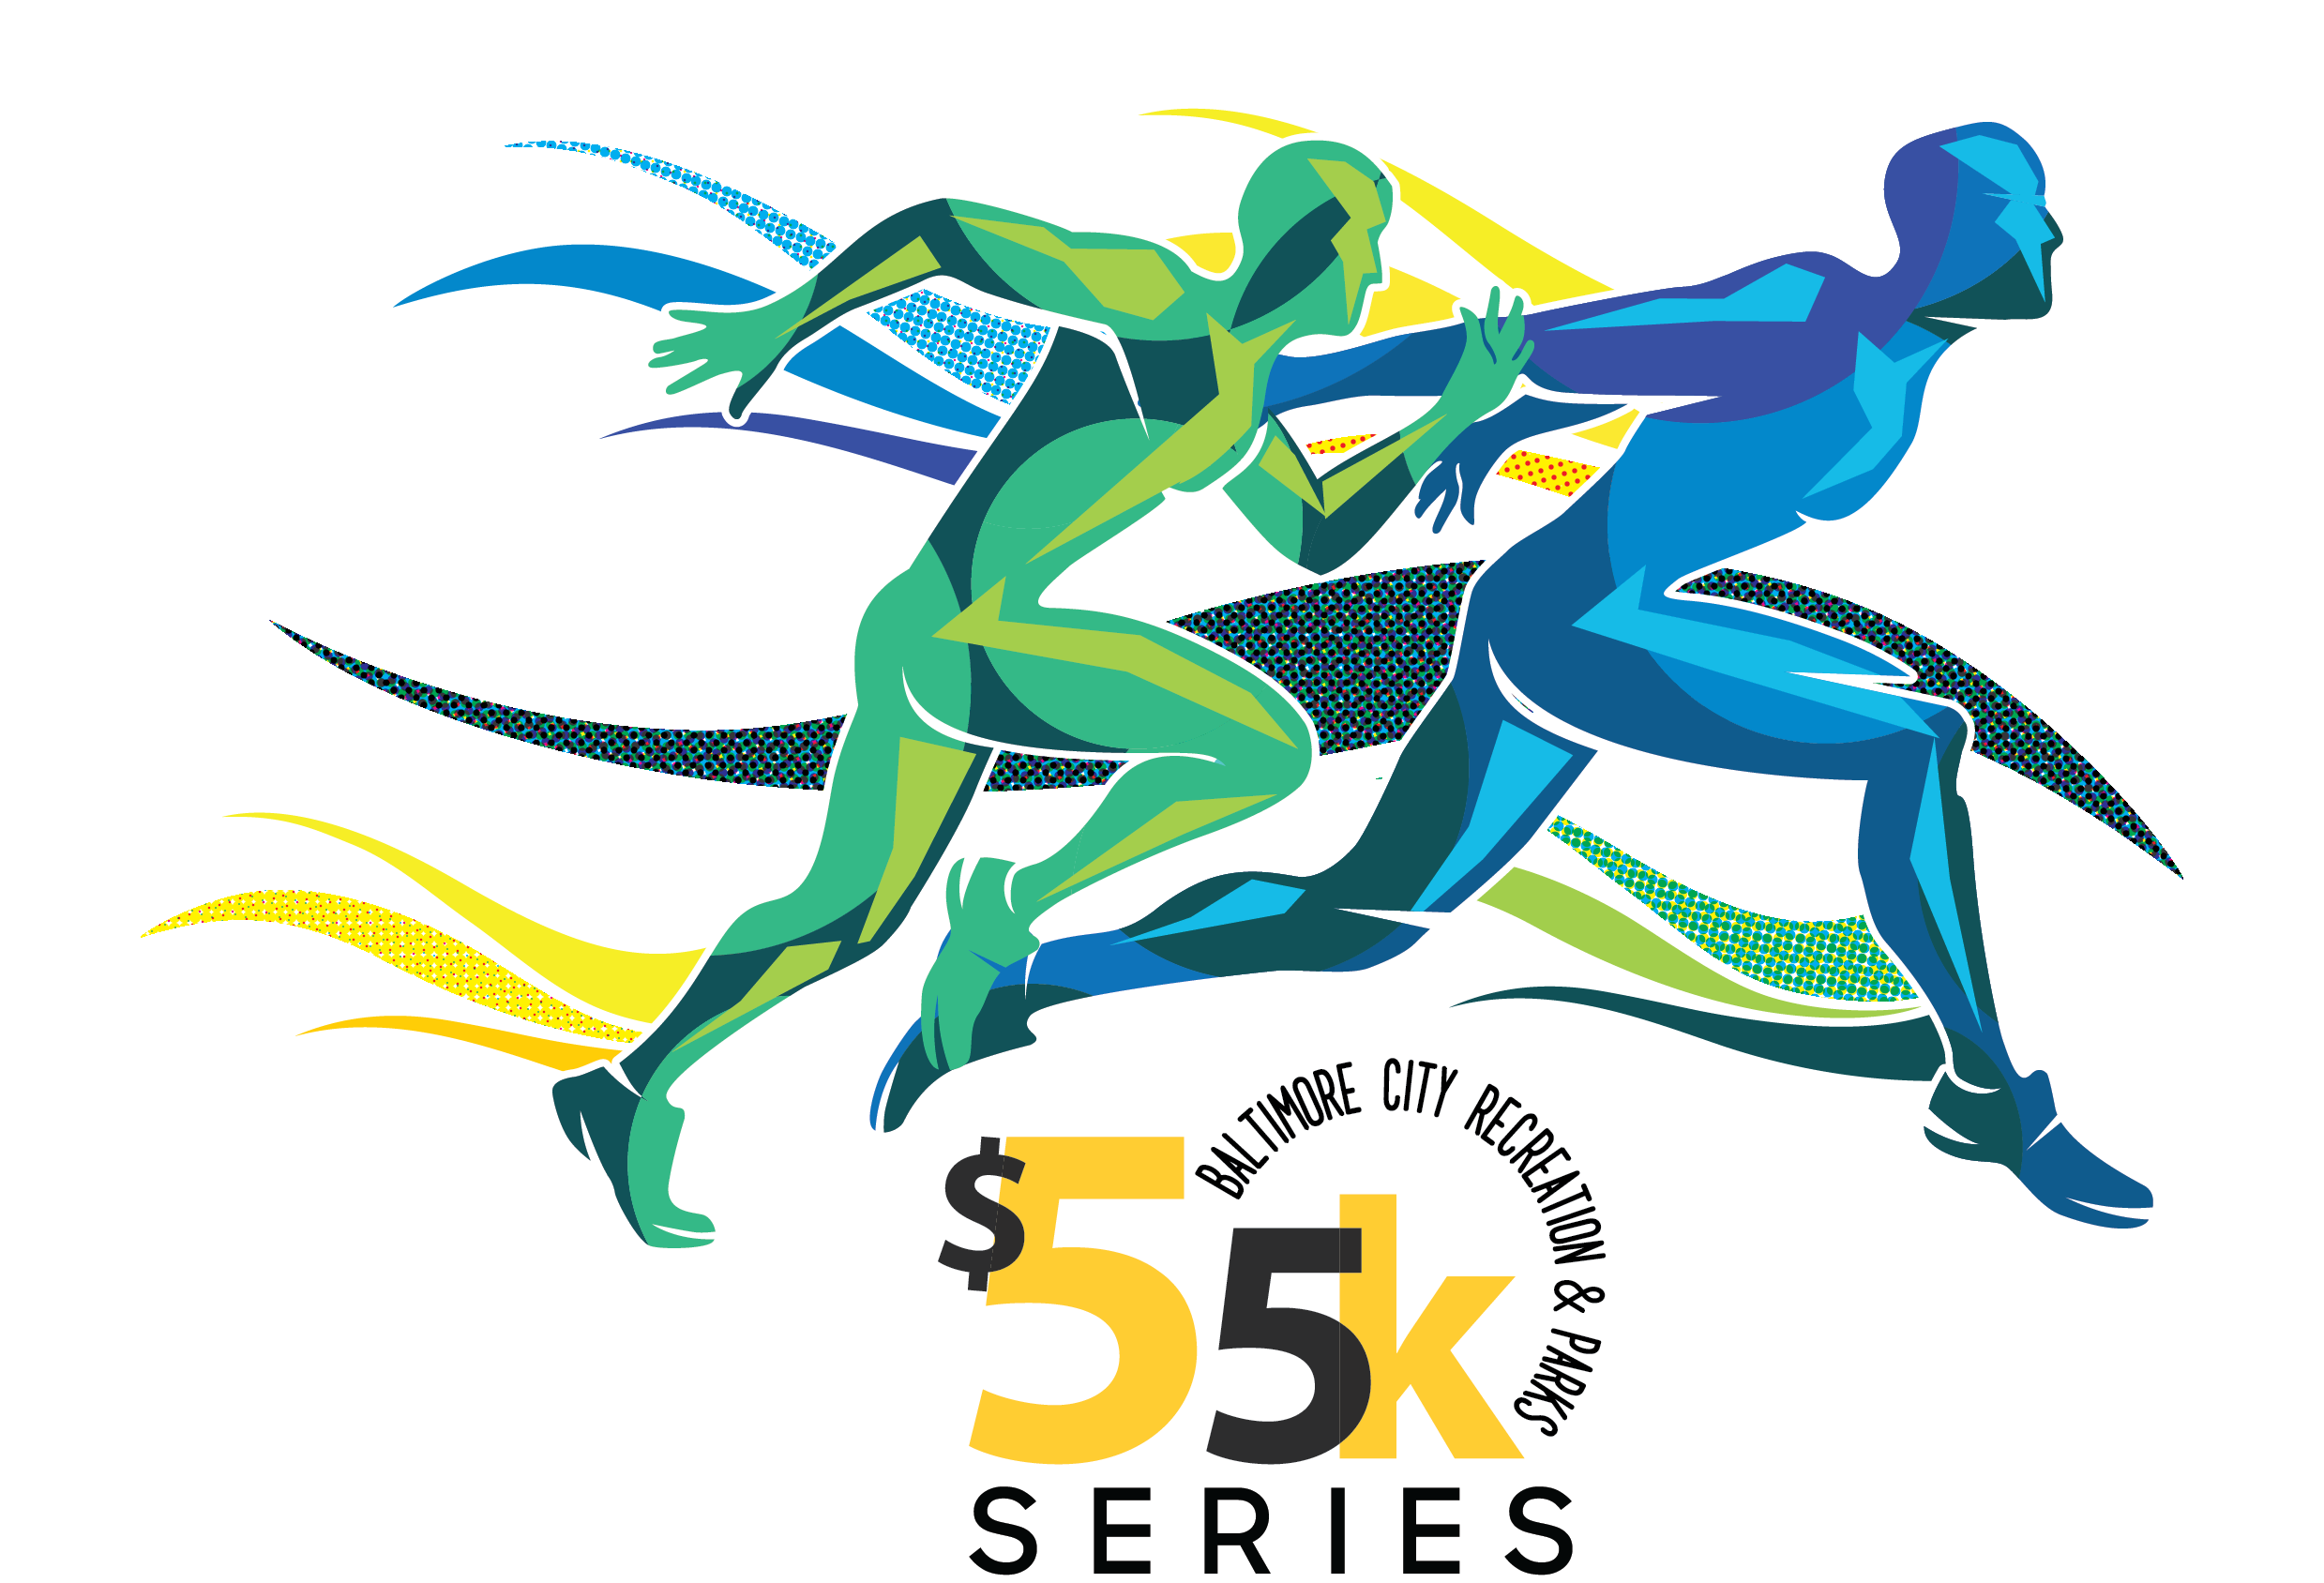 5 5K Run/Walk Series Department of Recreation & Parks